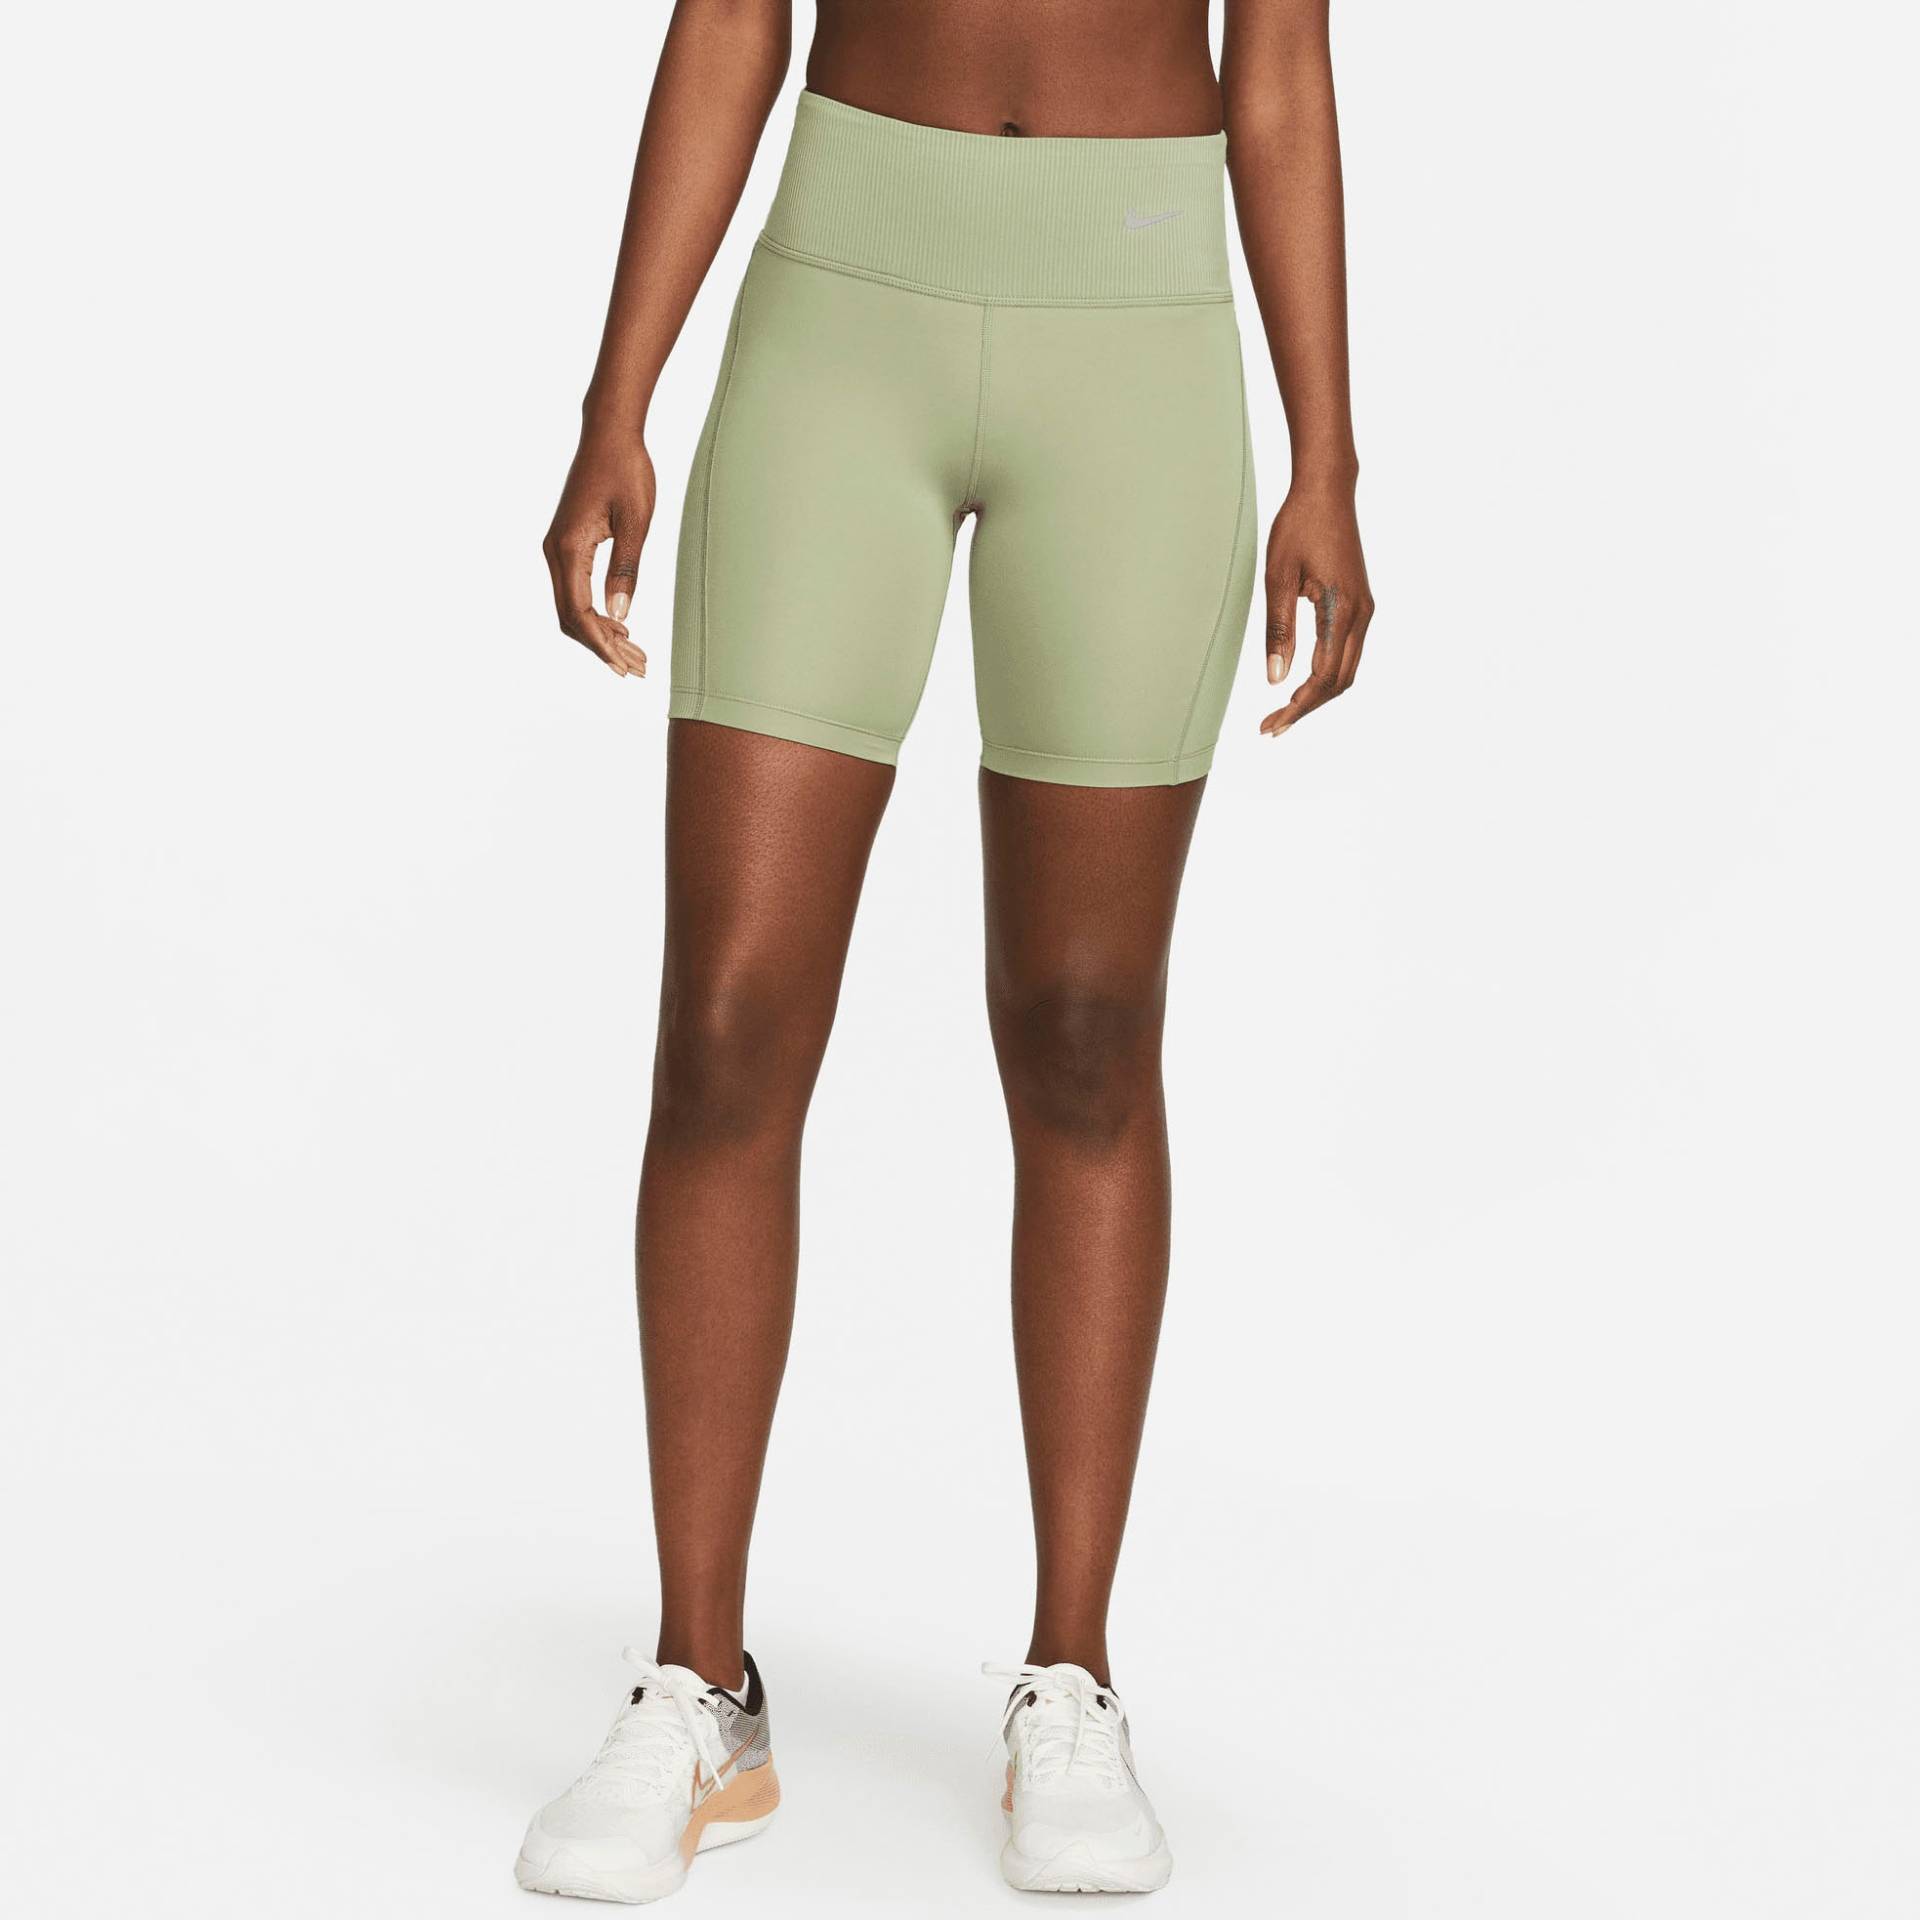 Nike Lauftights »Dri-FIT Women's Shorts« von Nike